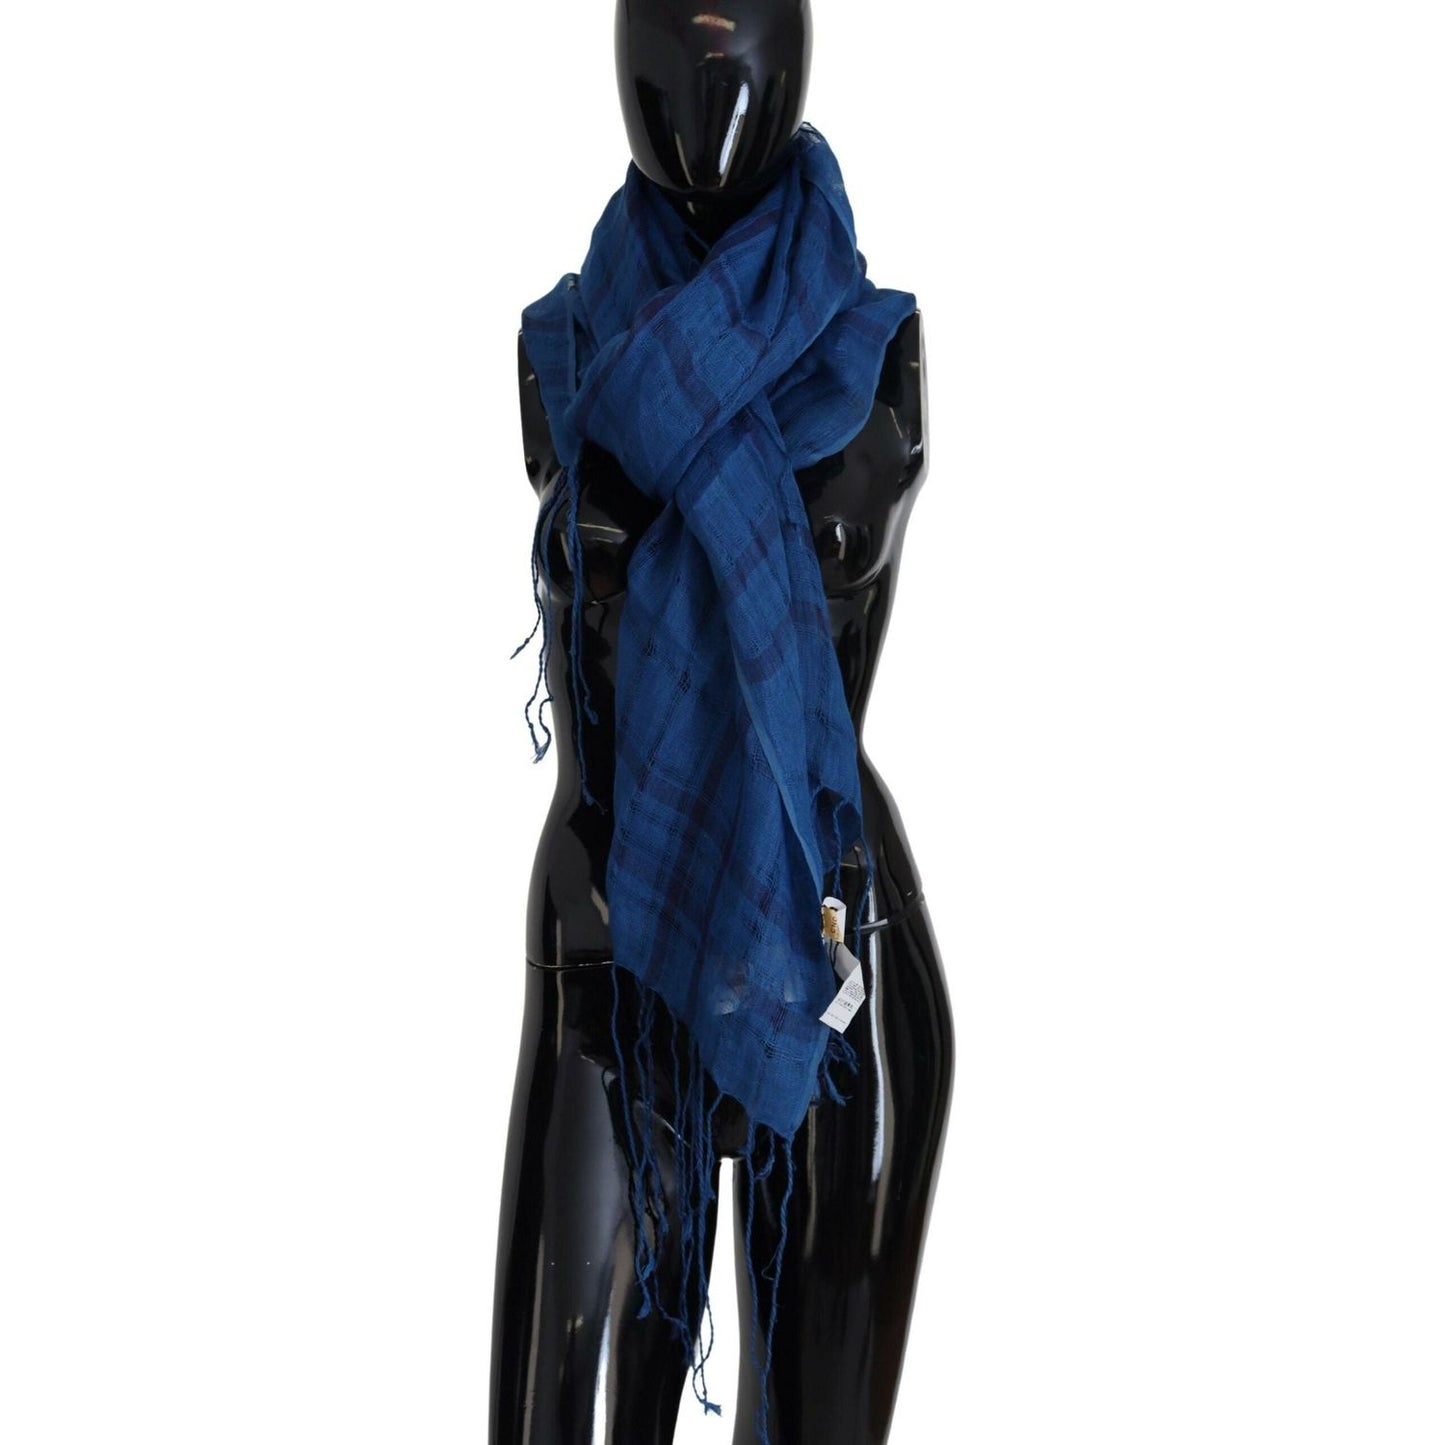 Costume National Blue Linen Shawl Foulard Fringes Scarf blue-linen-shawl-foulard-fringes-scarf IMG_7708-scaled-58dfec33-44c.jpg